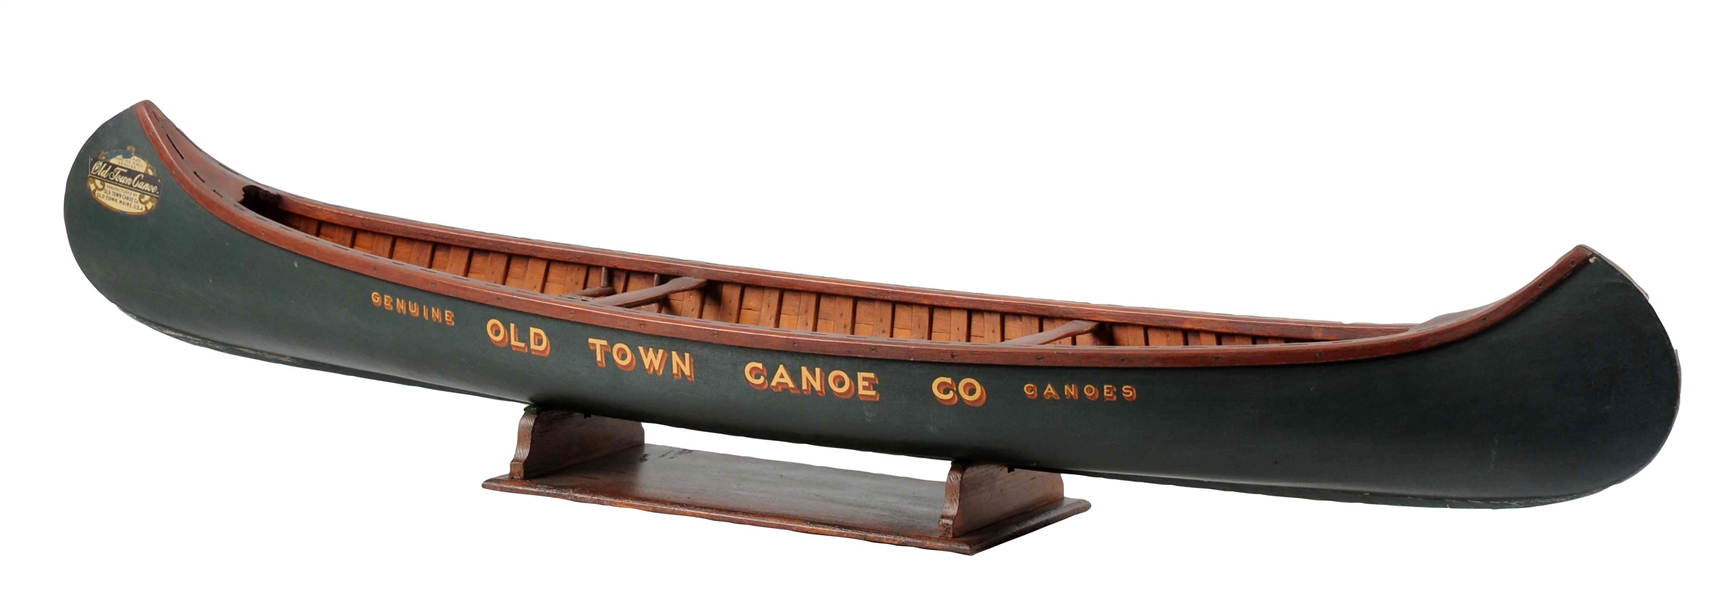 OLD TOWNE CANOE SALESMAN SAMPLE.